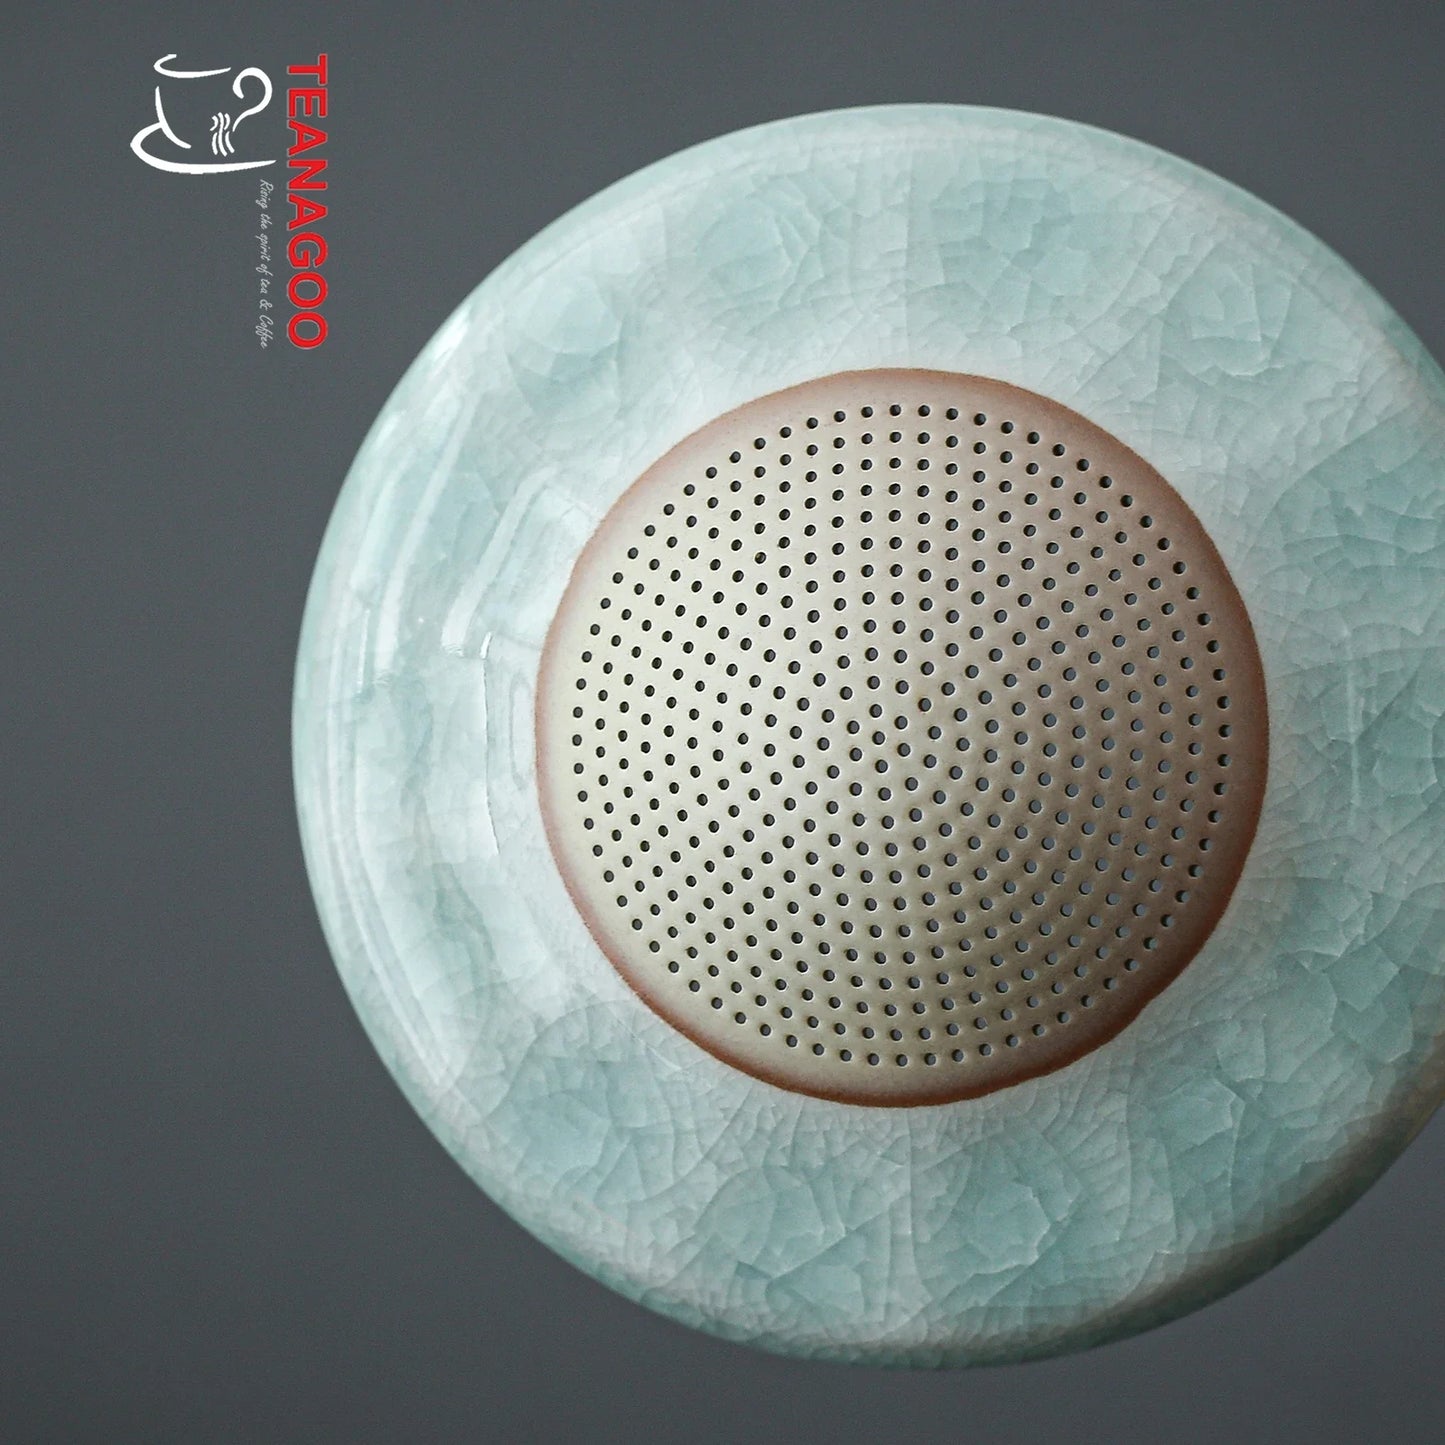 Handmade Ice Cracked Tea Strainer Ceramic Jianware Filter